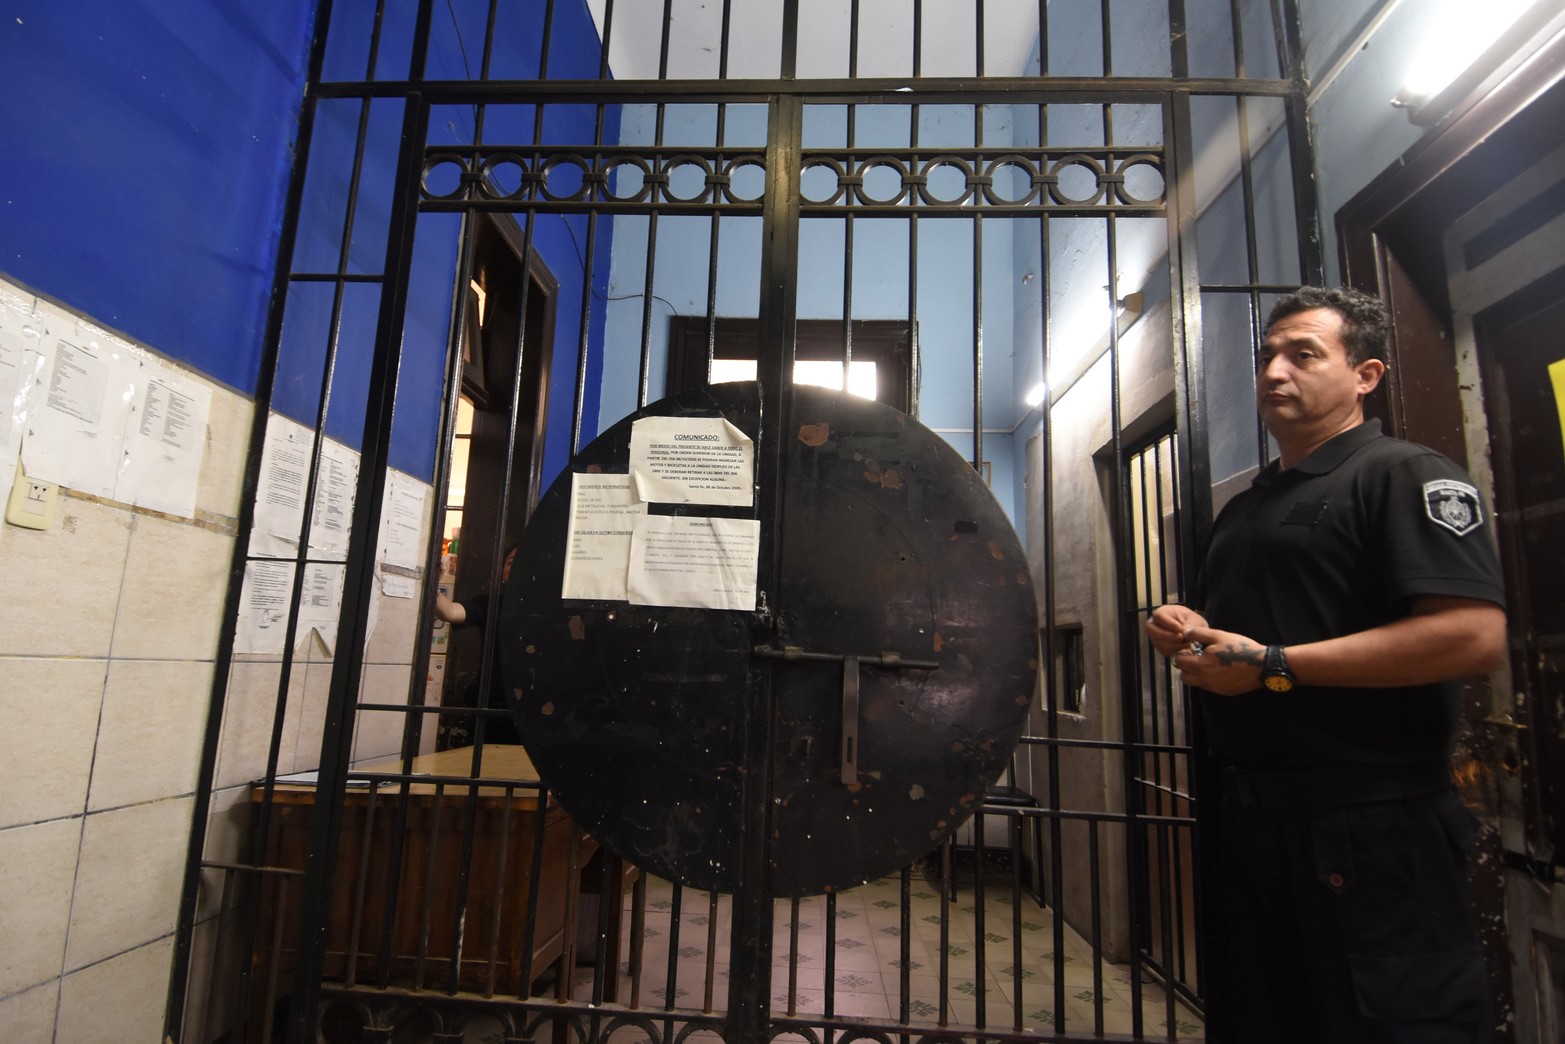 Cárcel de mujeres. Ingreso visita Foto Flavio Raina